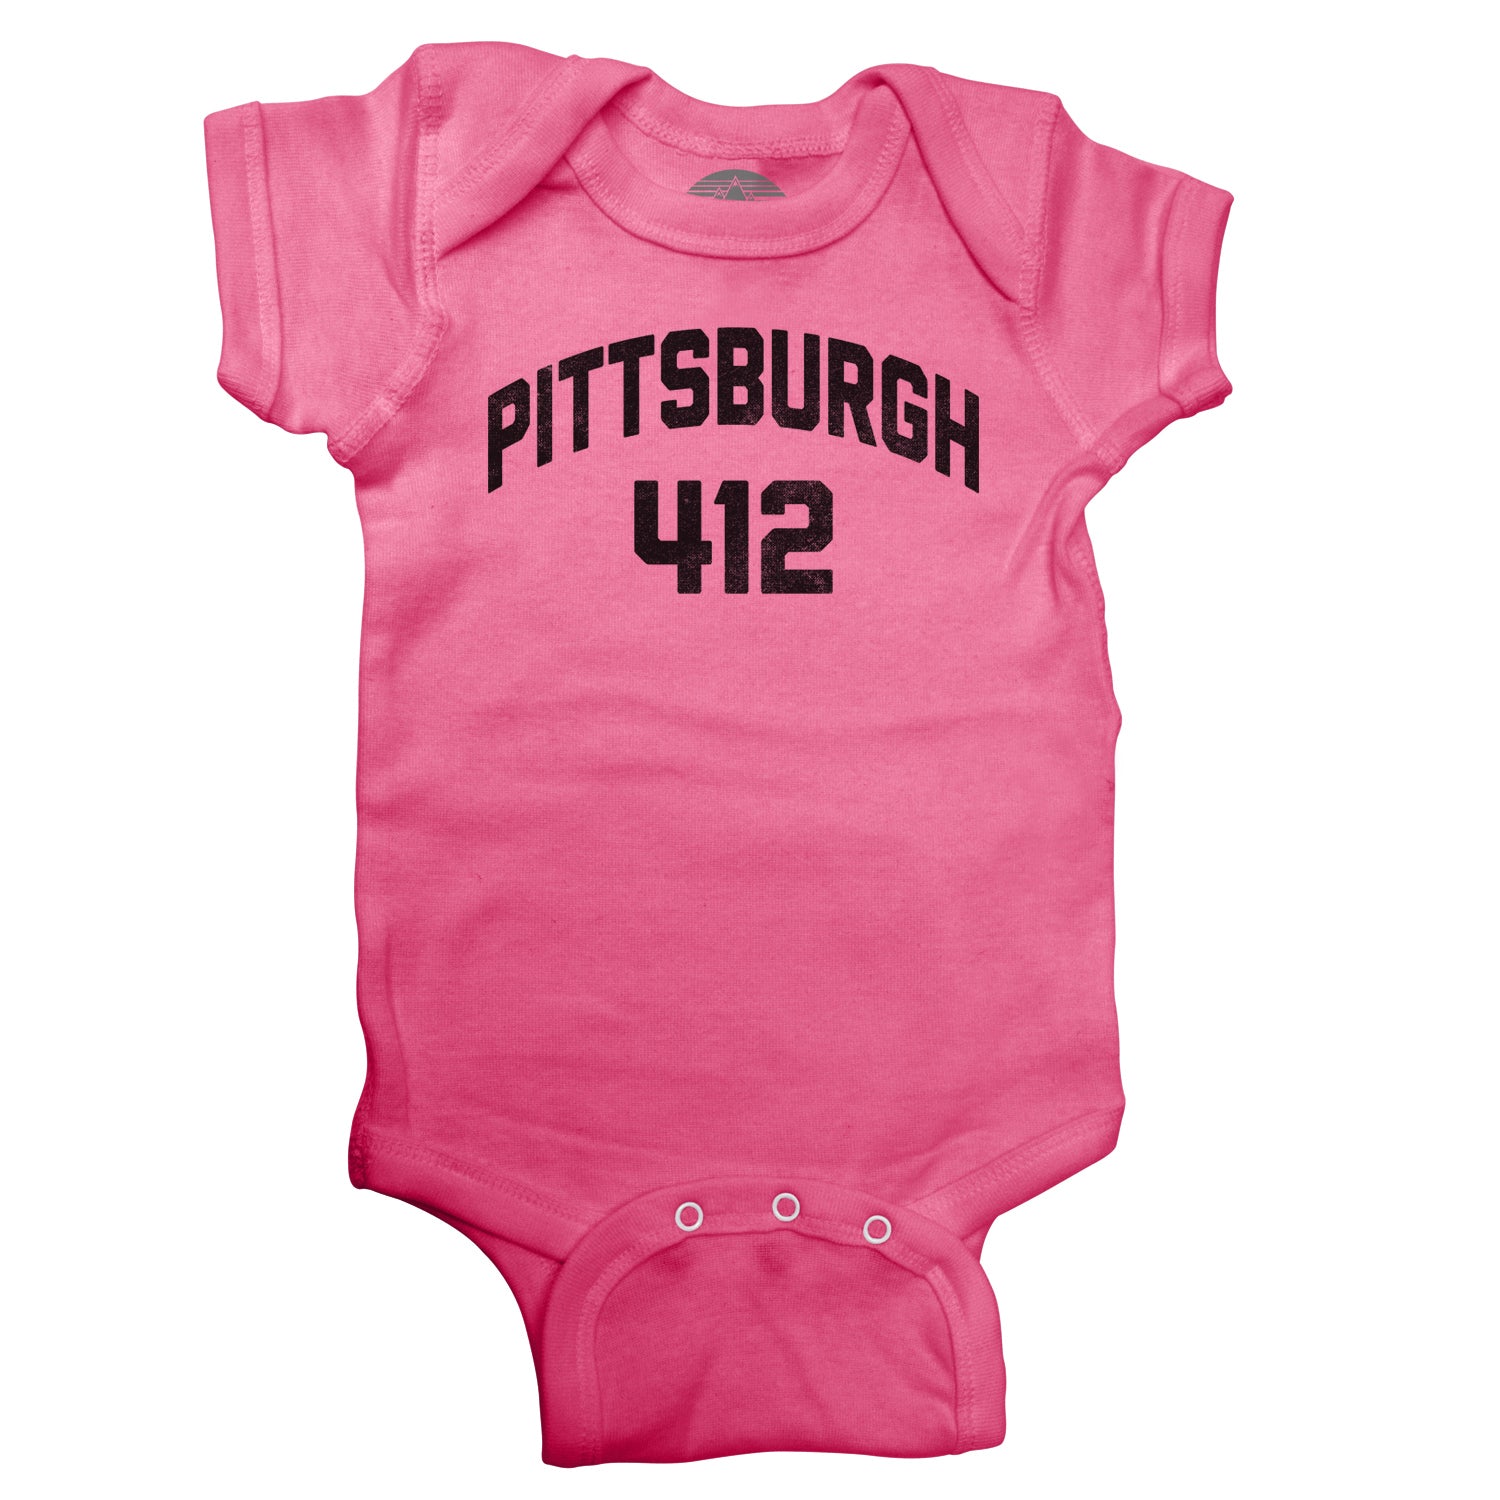 Pittsburgh 412 Area Code Infant Bodysuit - Unisex Fit